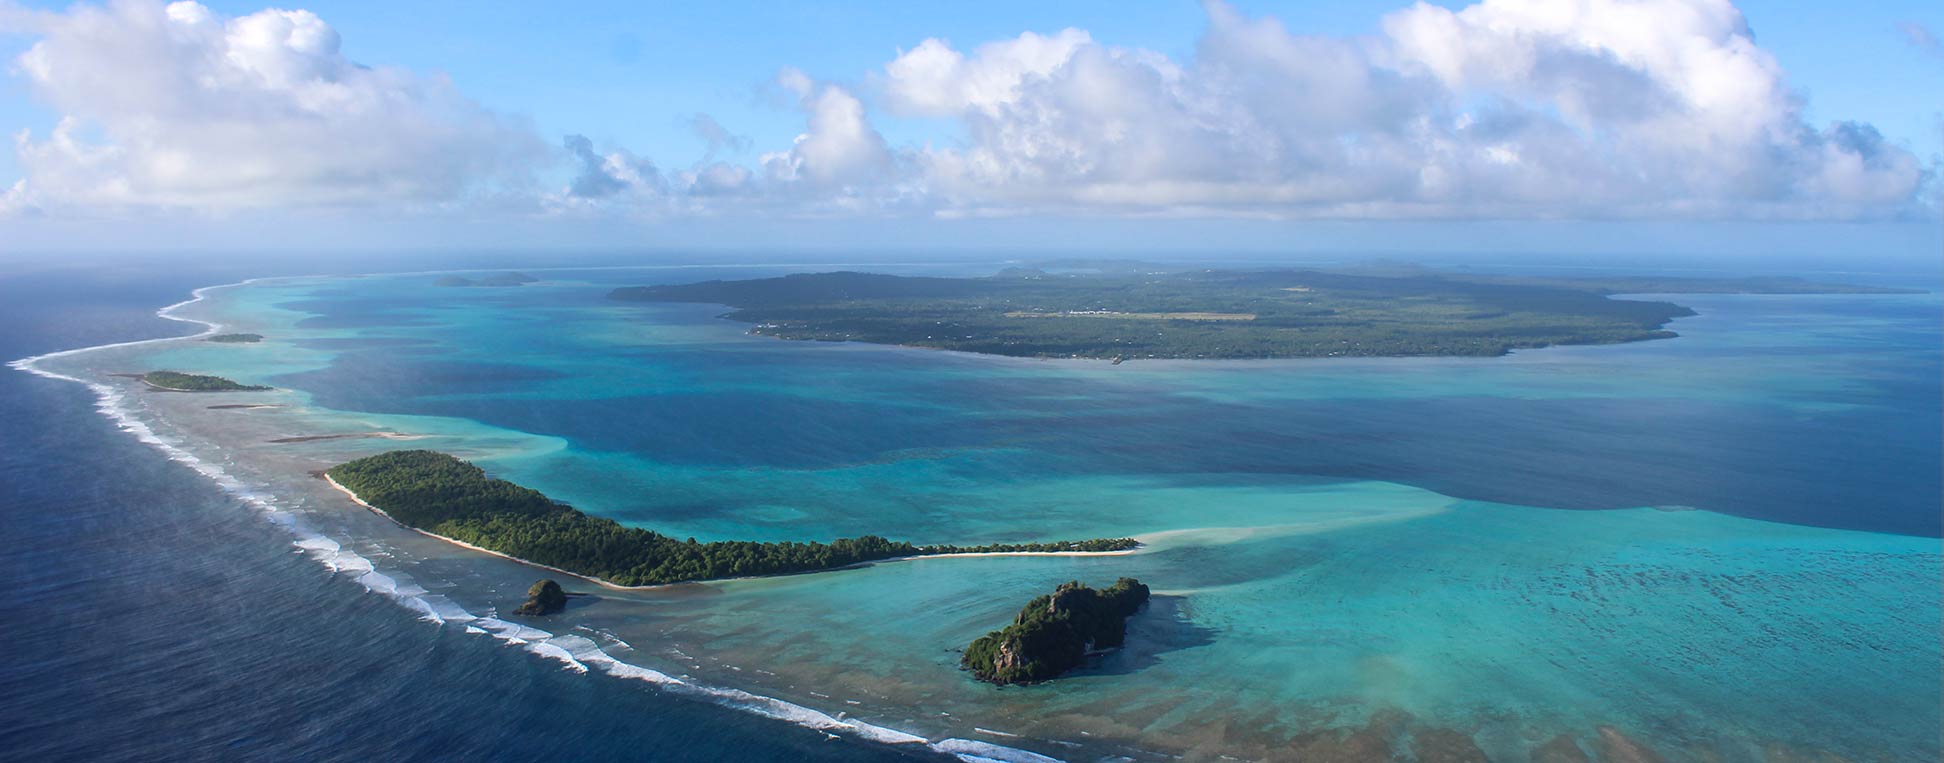 Aerial view of Wallis Island, Micronesia